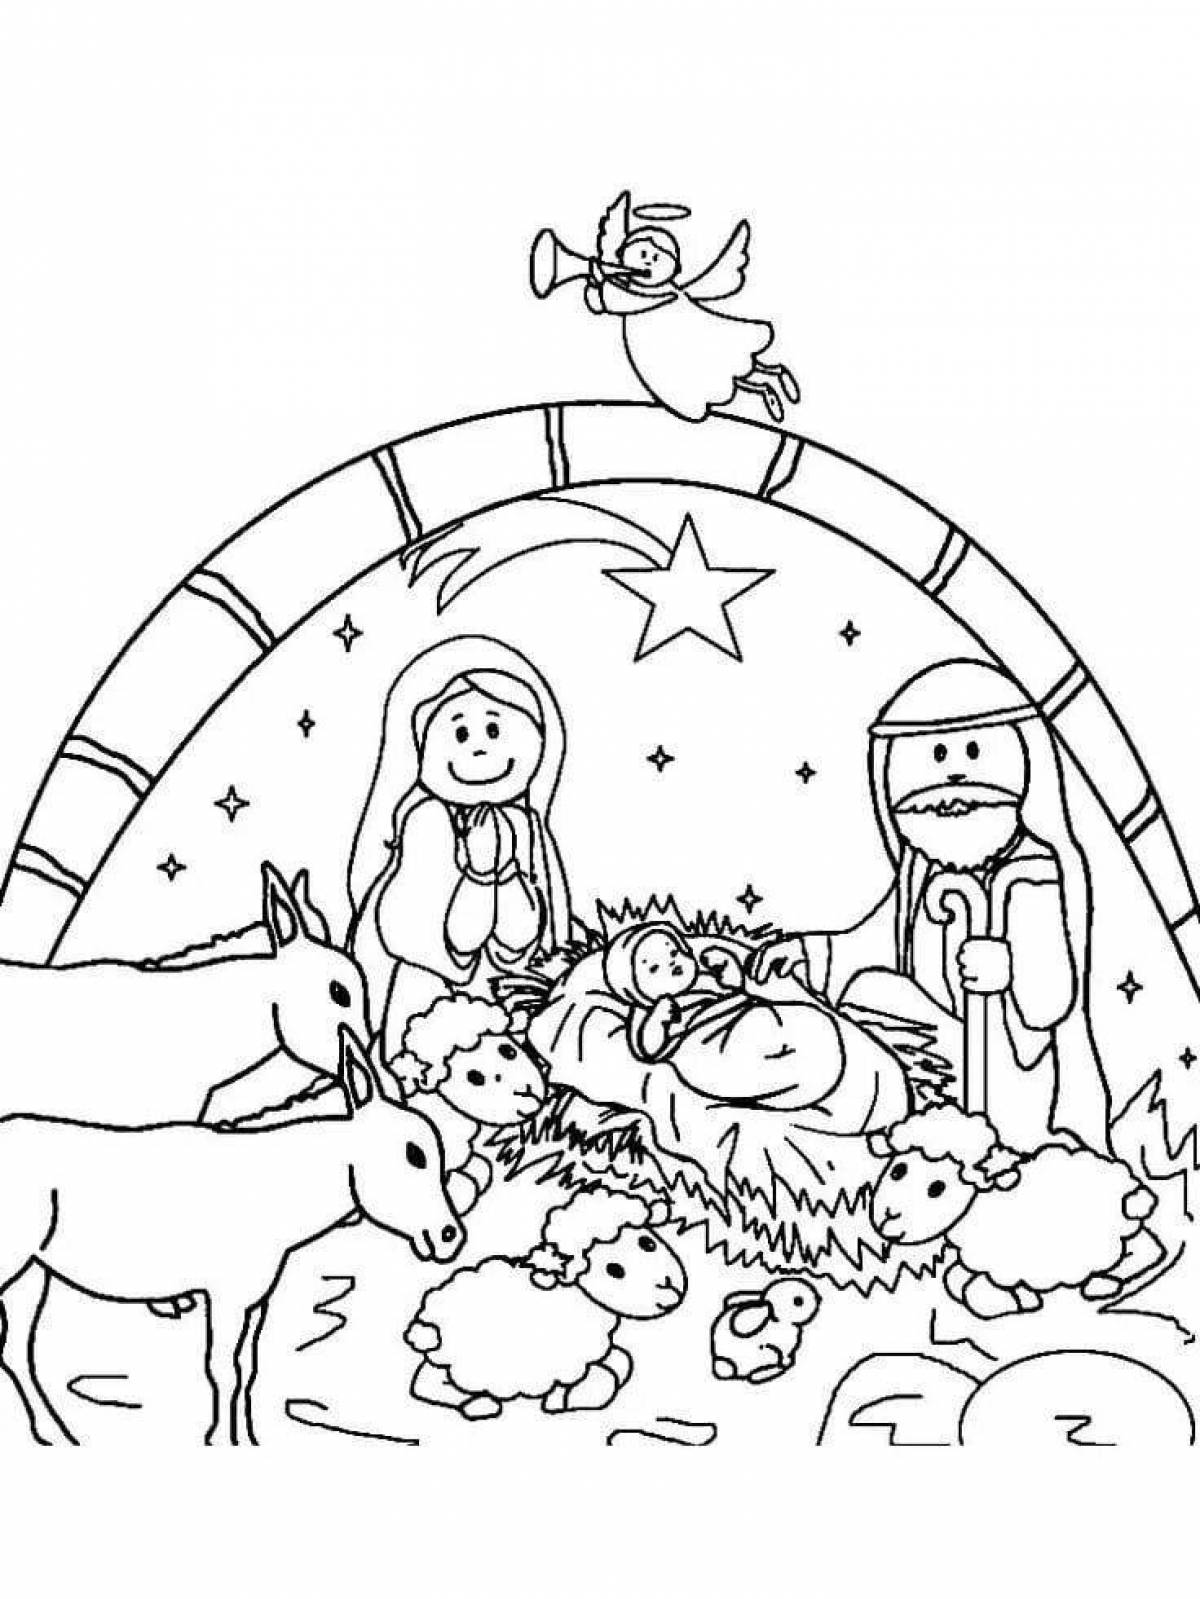 Fun coloring nativity scene for kids